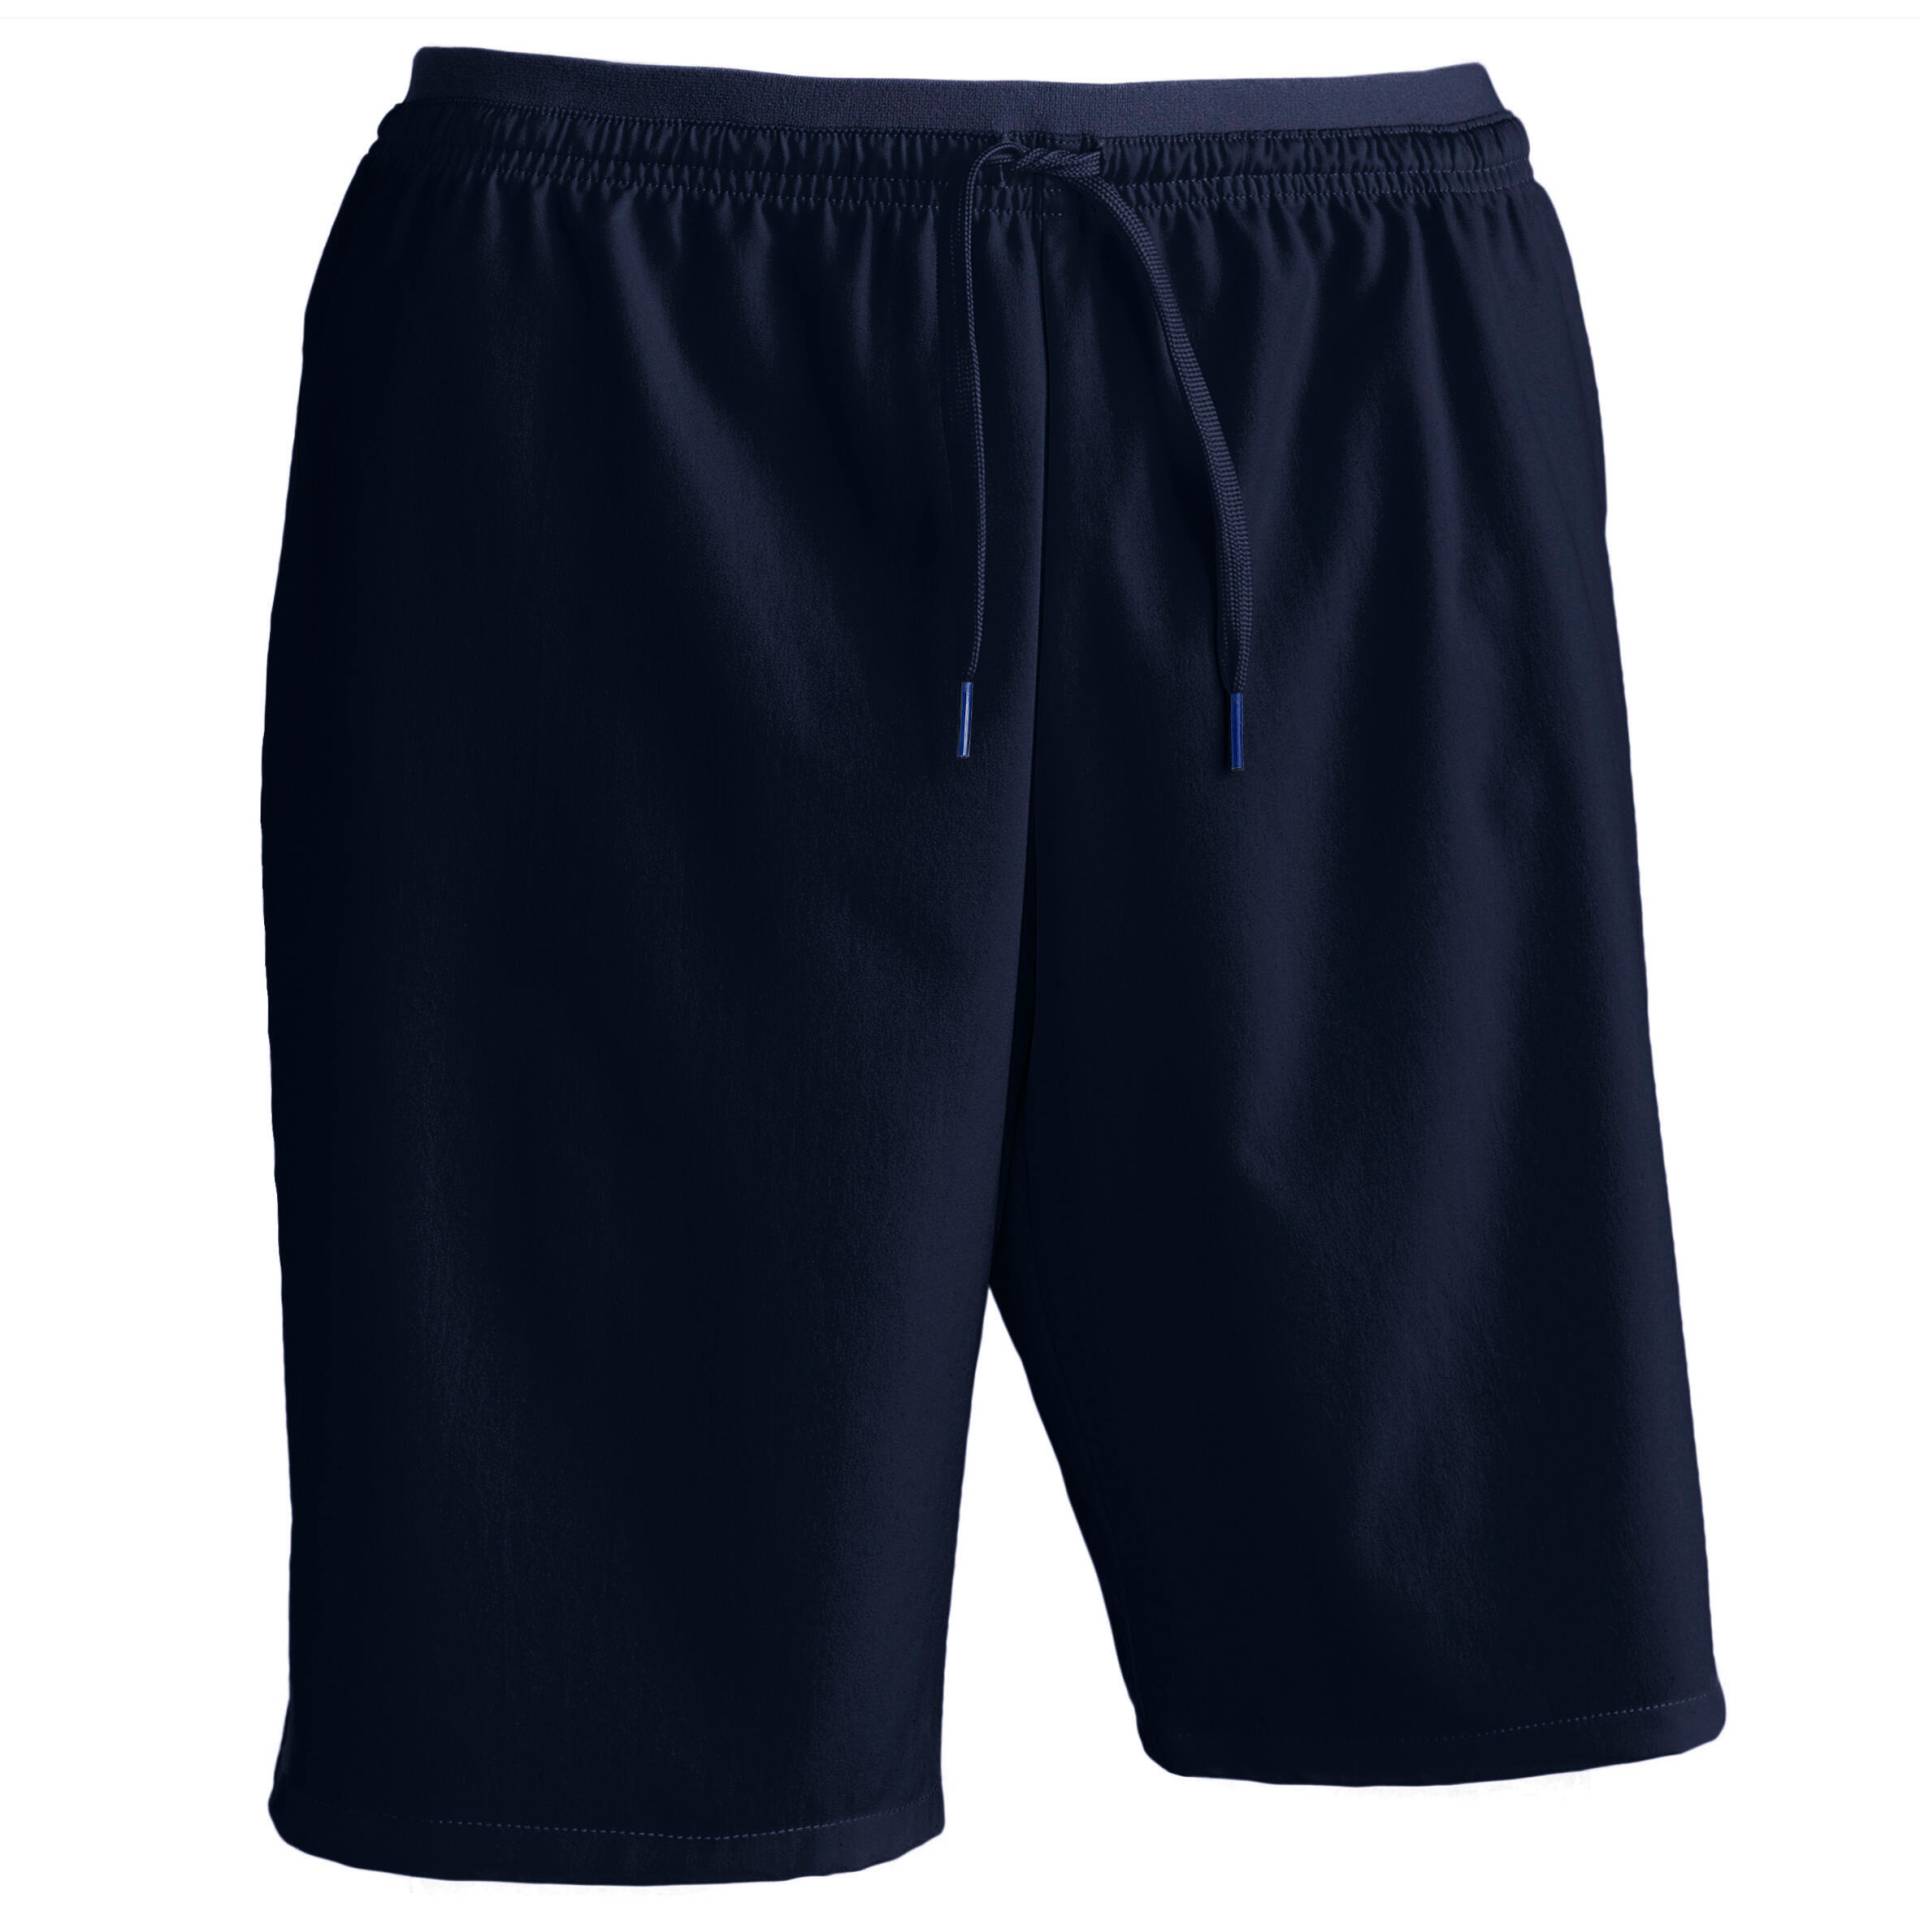 Damen/Herren Fussball Shorts Viralto marineblau von KIPSTA